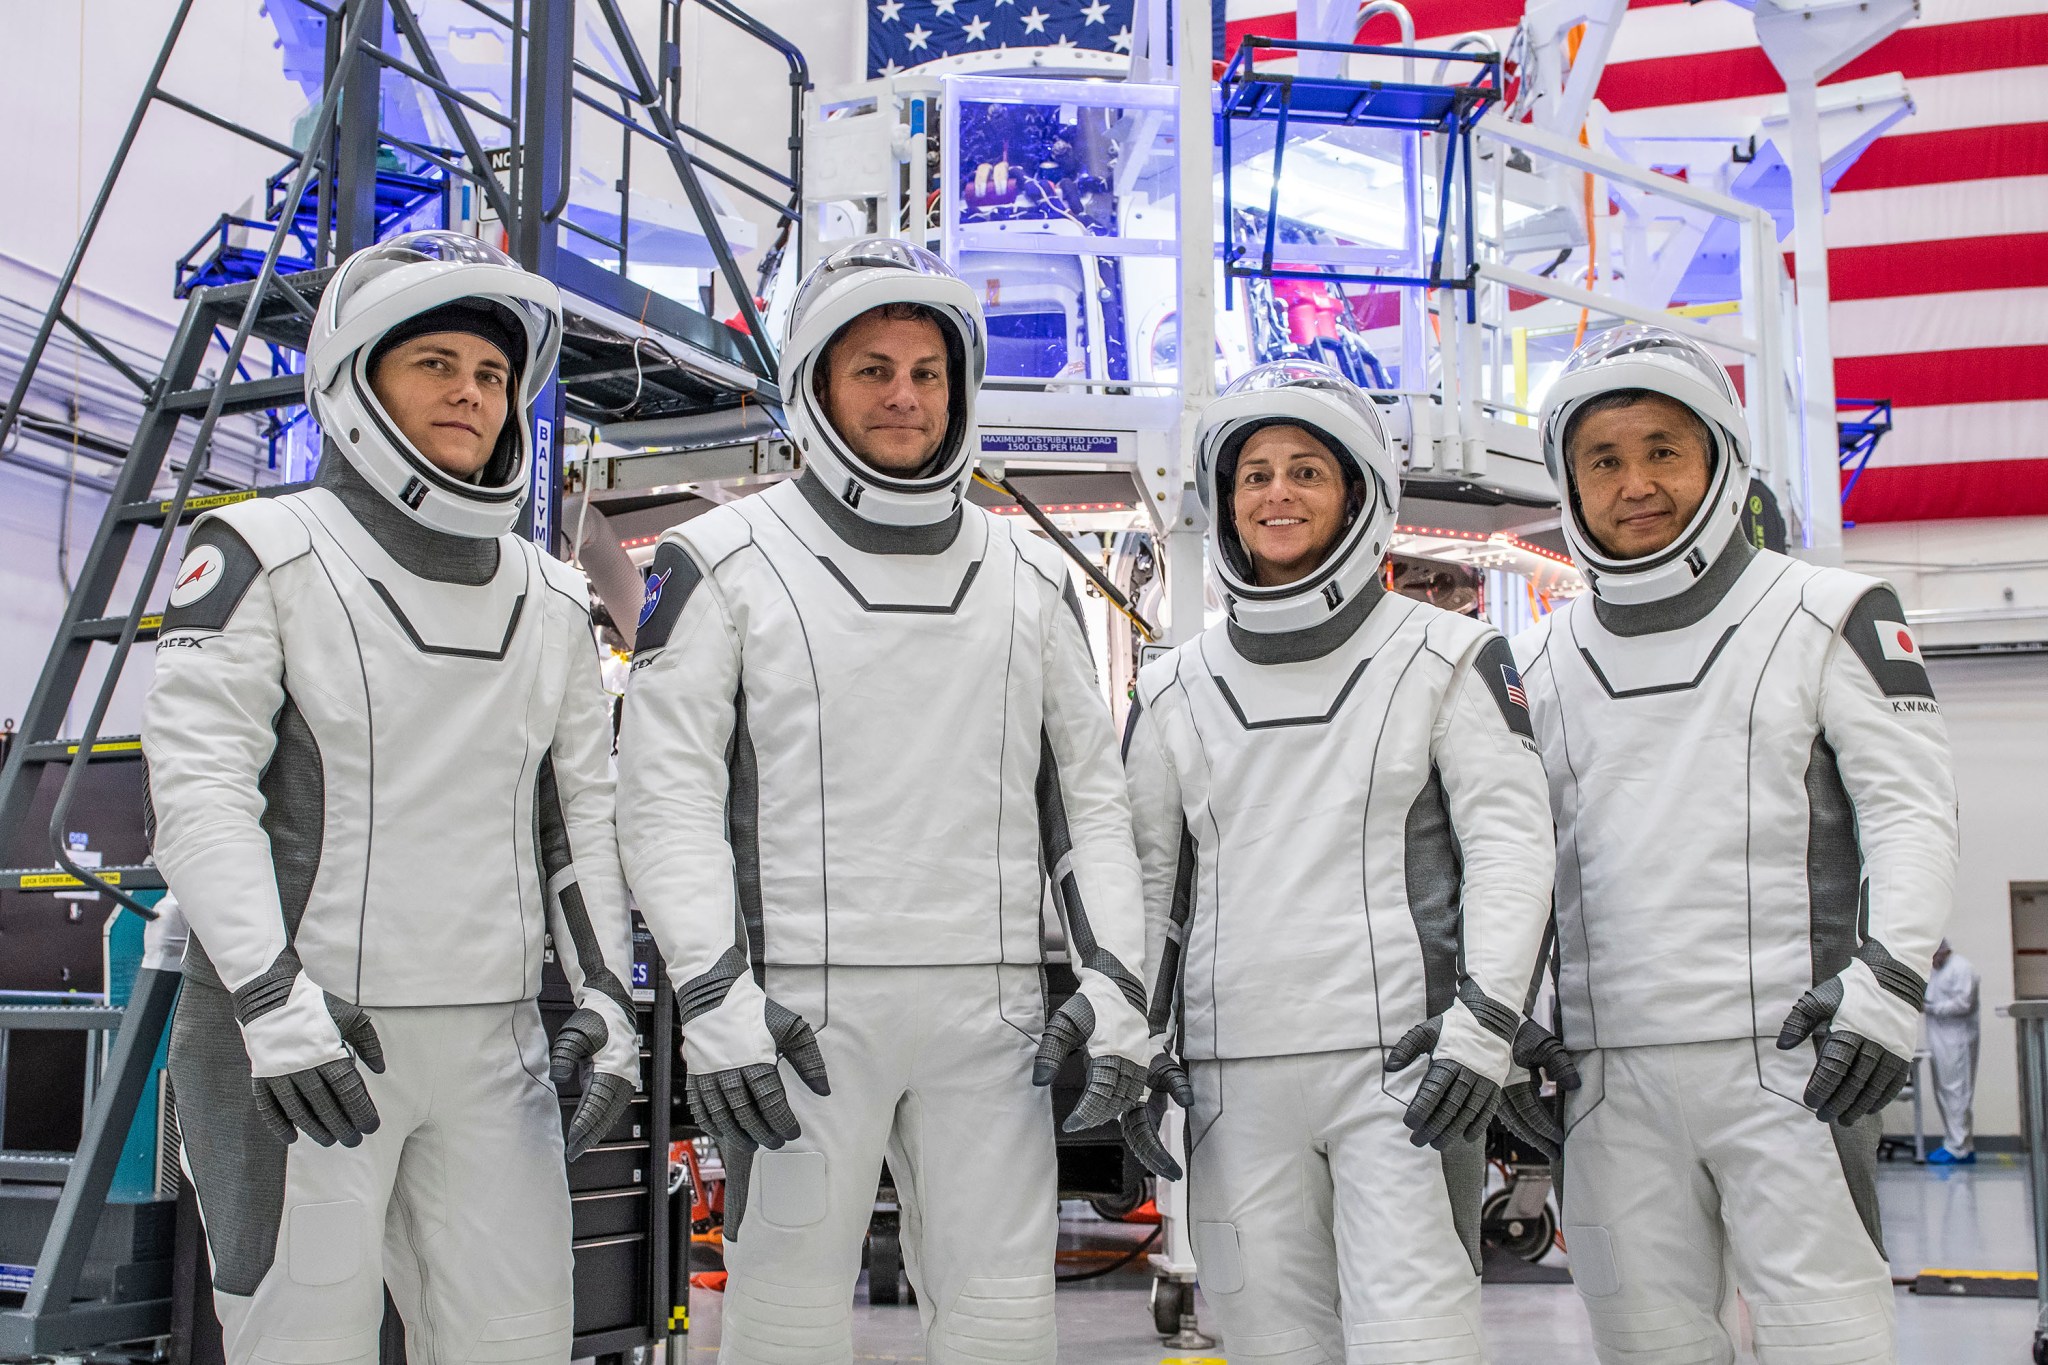 From left are, Mission Specialist Anna Kikina from Roscosmos; Pilot Josh Cassada and Commander Nicole Aunapu Mann, both from NASA; and Mission Specialist Koichi Wakata from the Japan Aerospace Exploration Agency (JAXA)